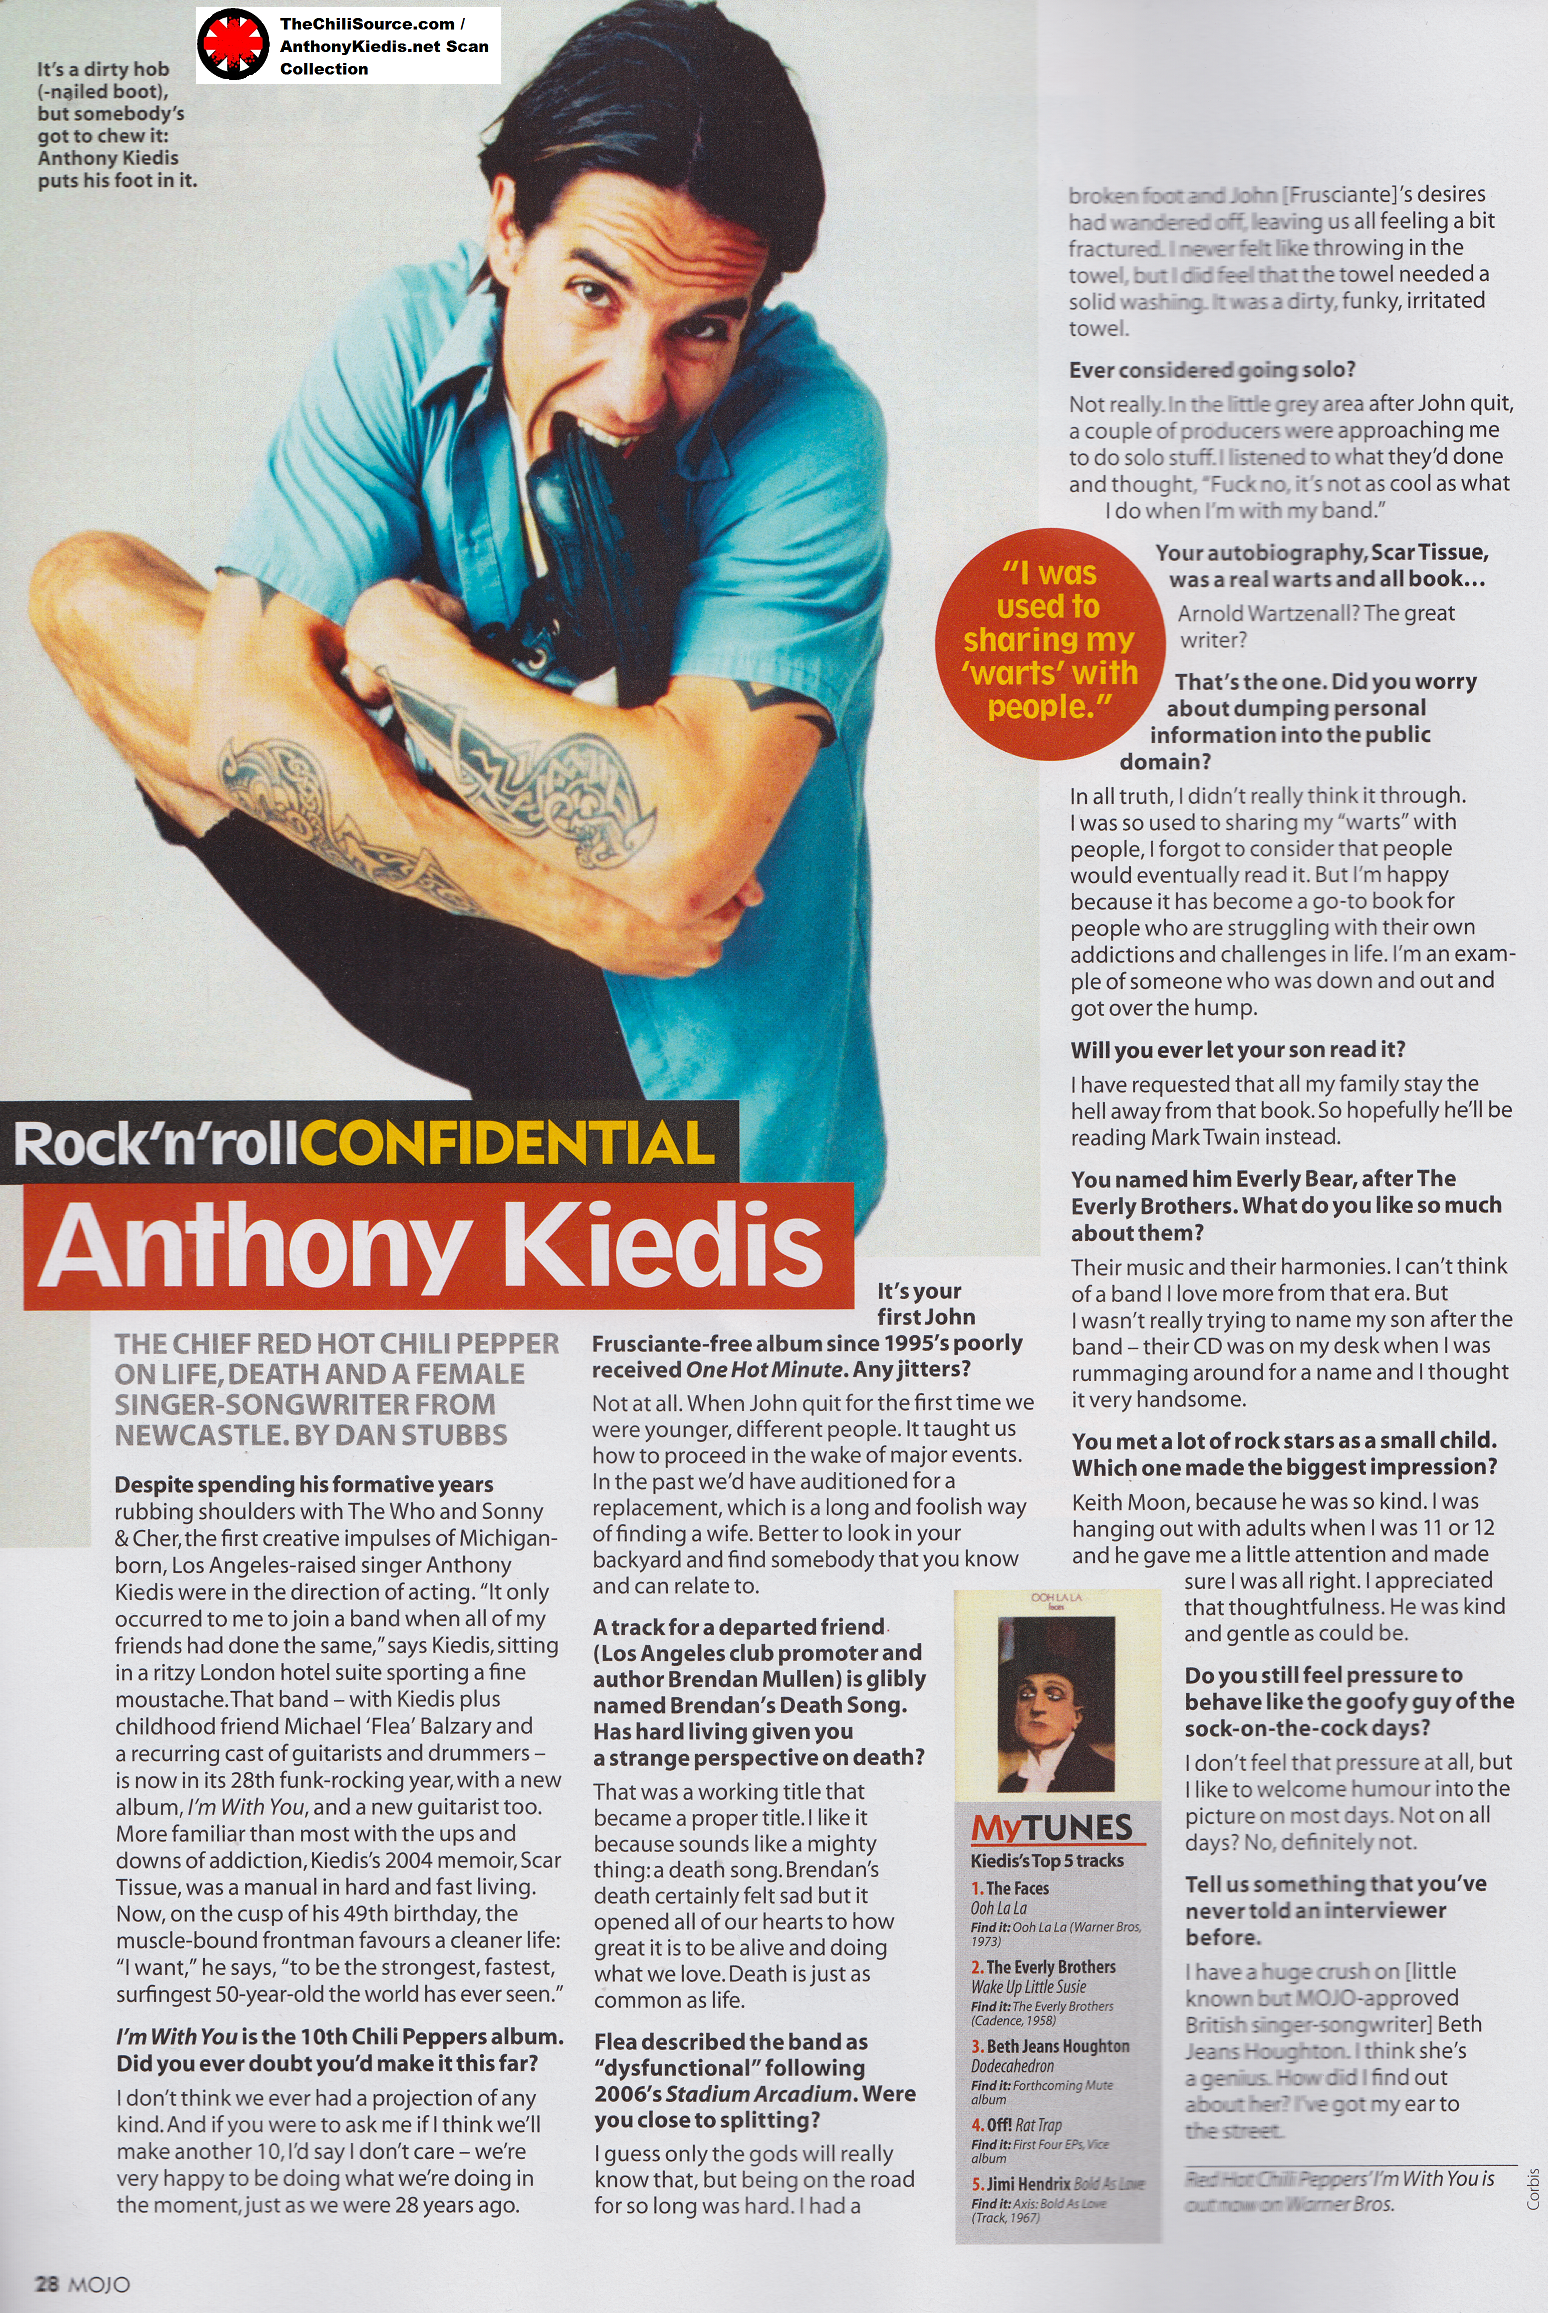 Anthony Kiedis Interview: Mojo December 2011.